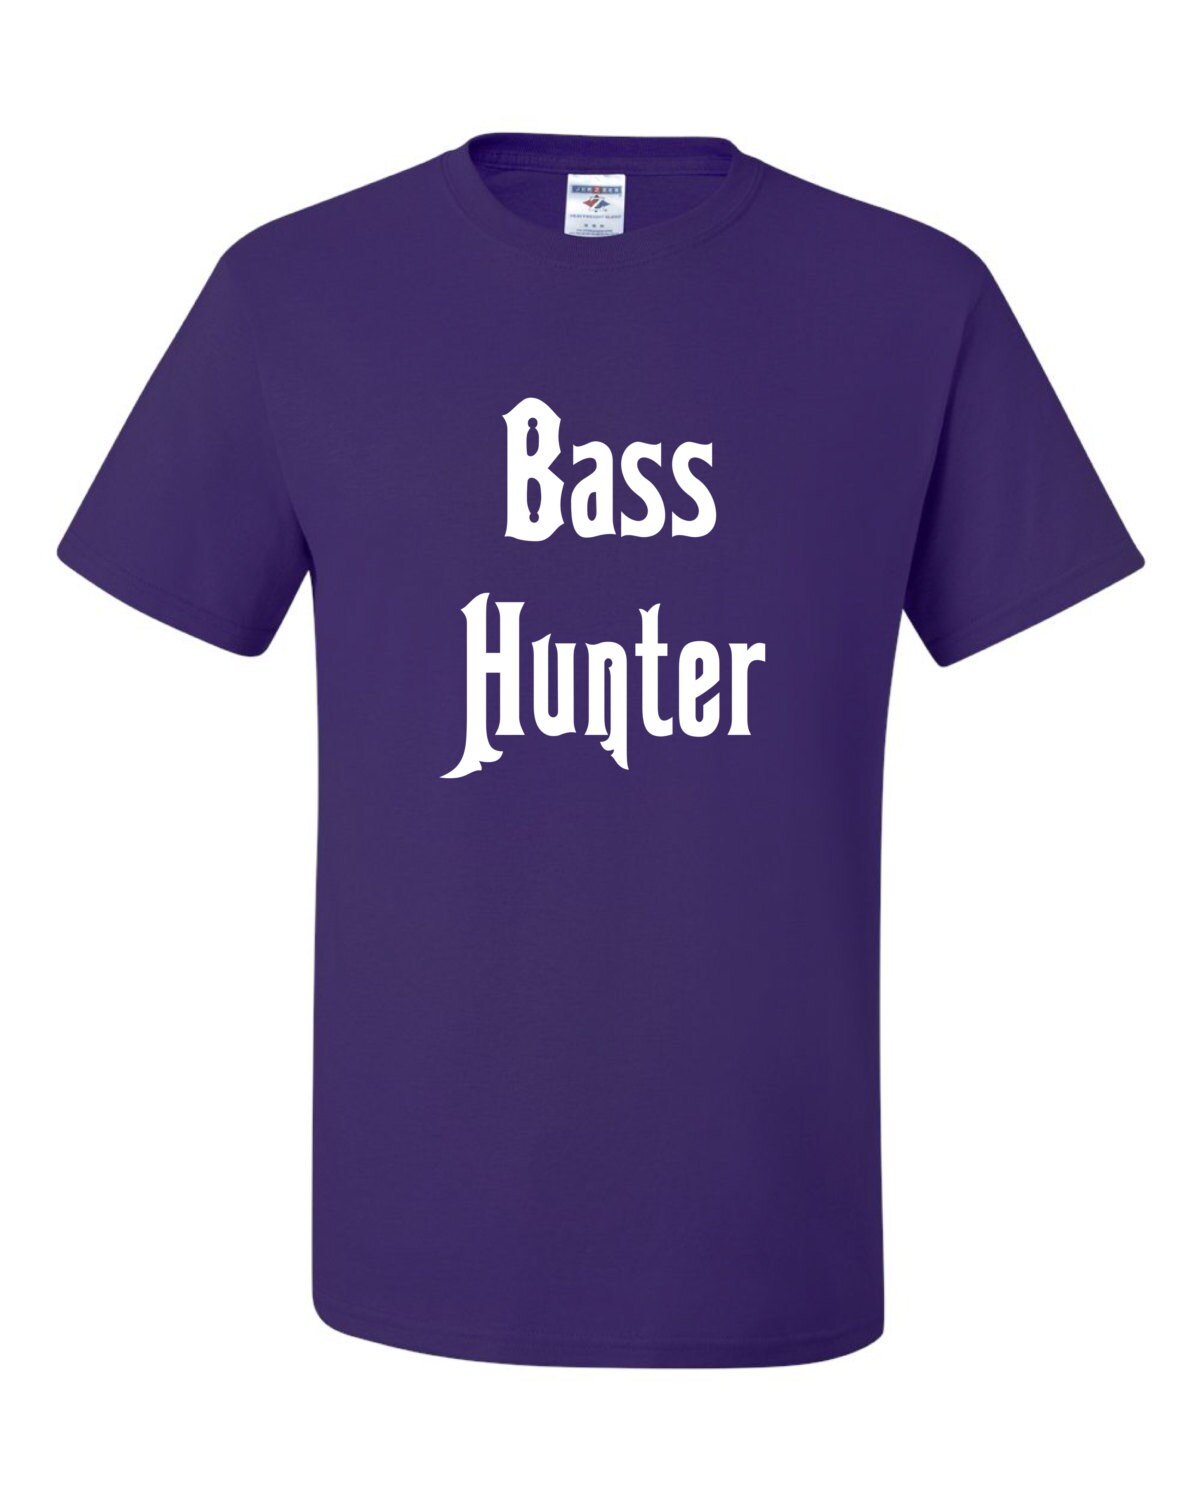 Bass Hunter T-shirt | Etsy